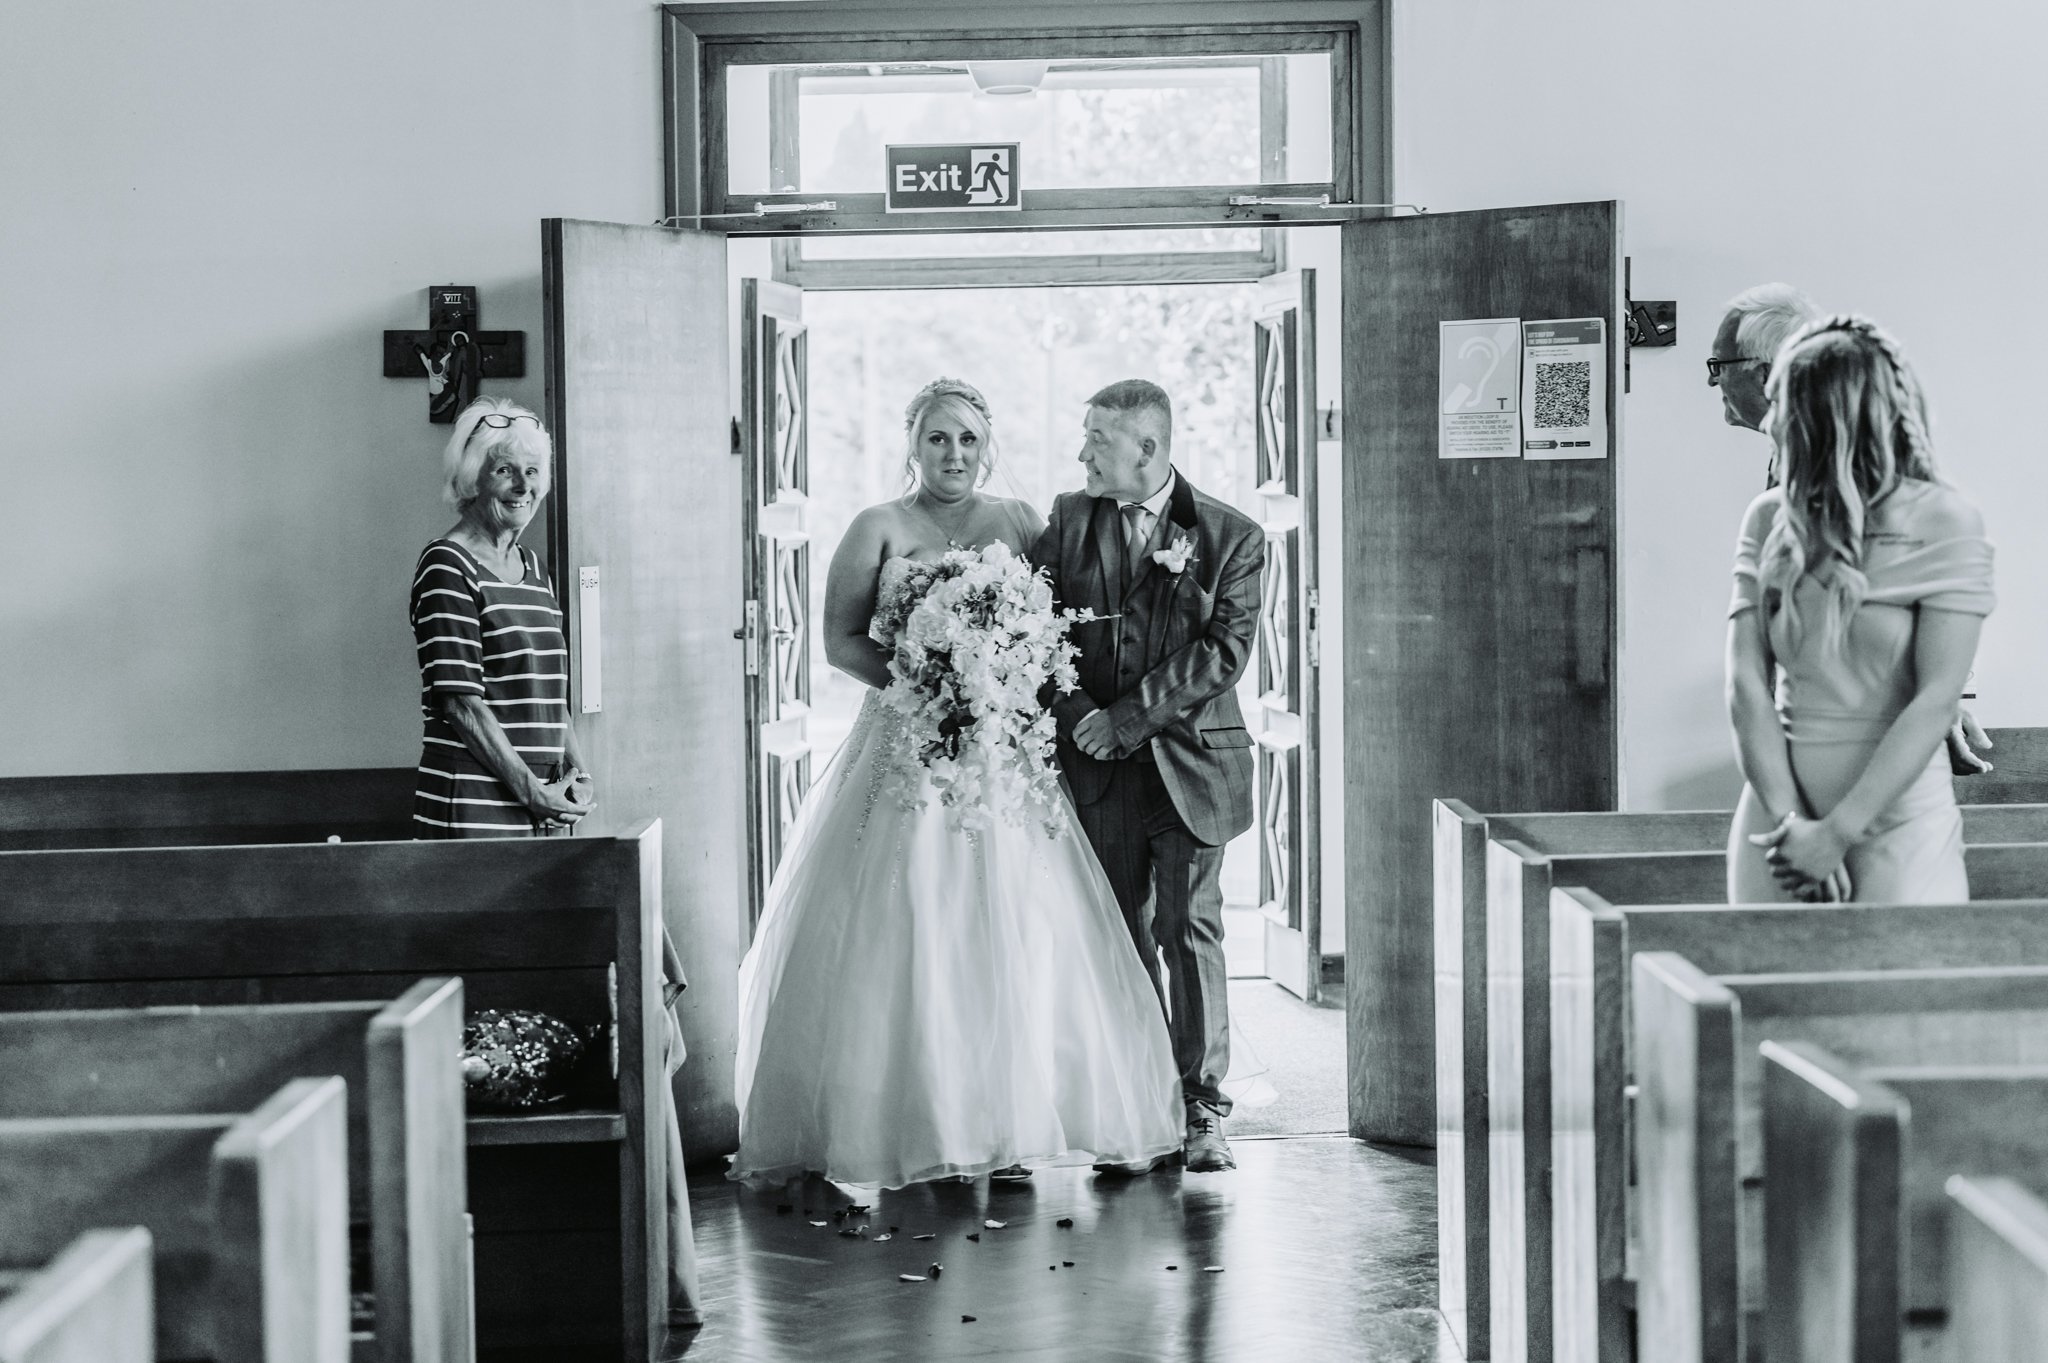 Saint-Clares-Church-Newton-Aycliffe-wedding-photograper (2 of 13).jpg